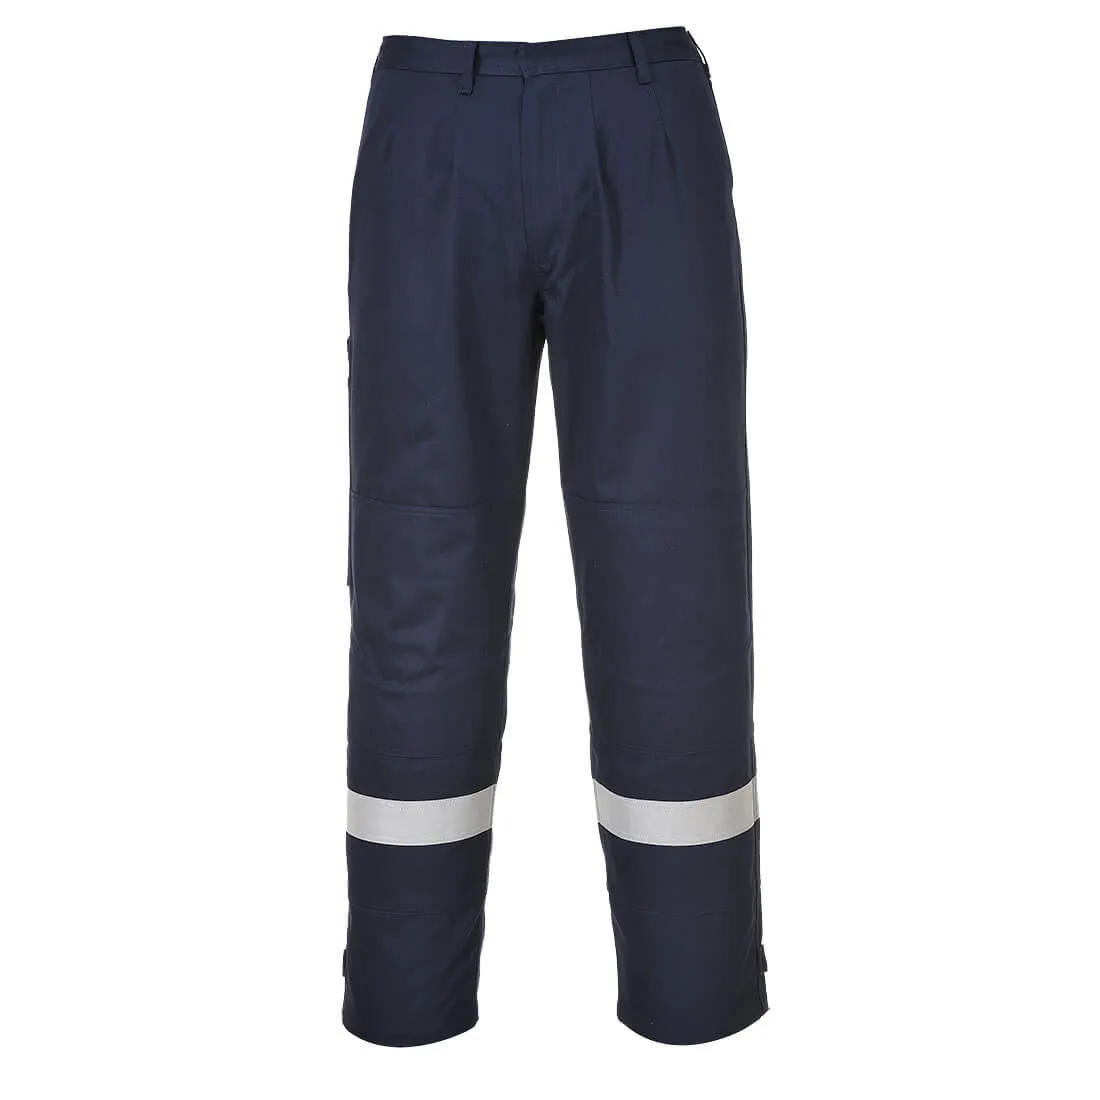 Biz Flame Plus Mens Flame Resistant Trousers - Navy Blue, Large, 32"